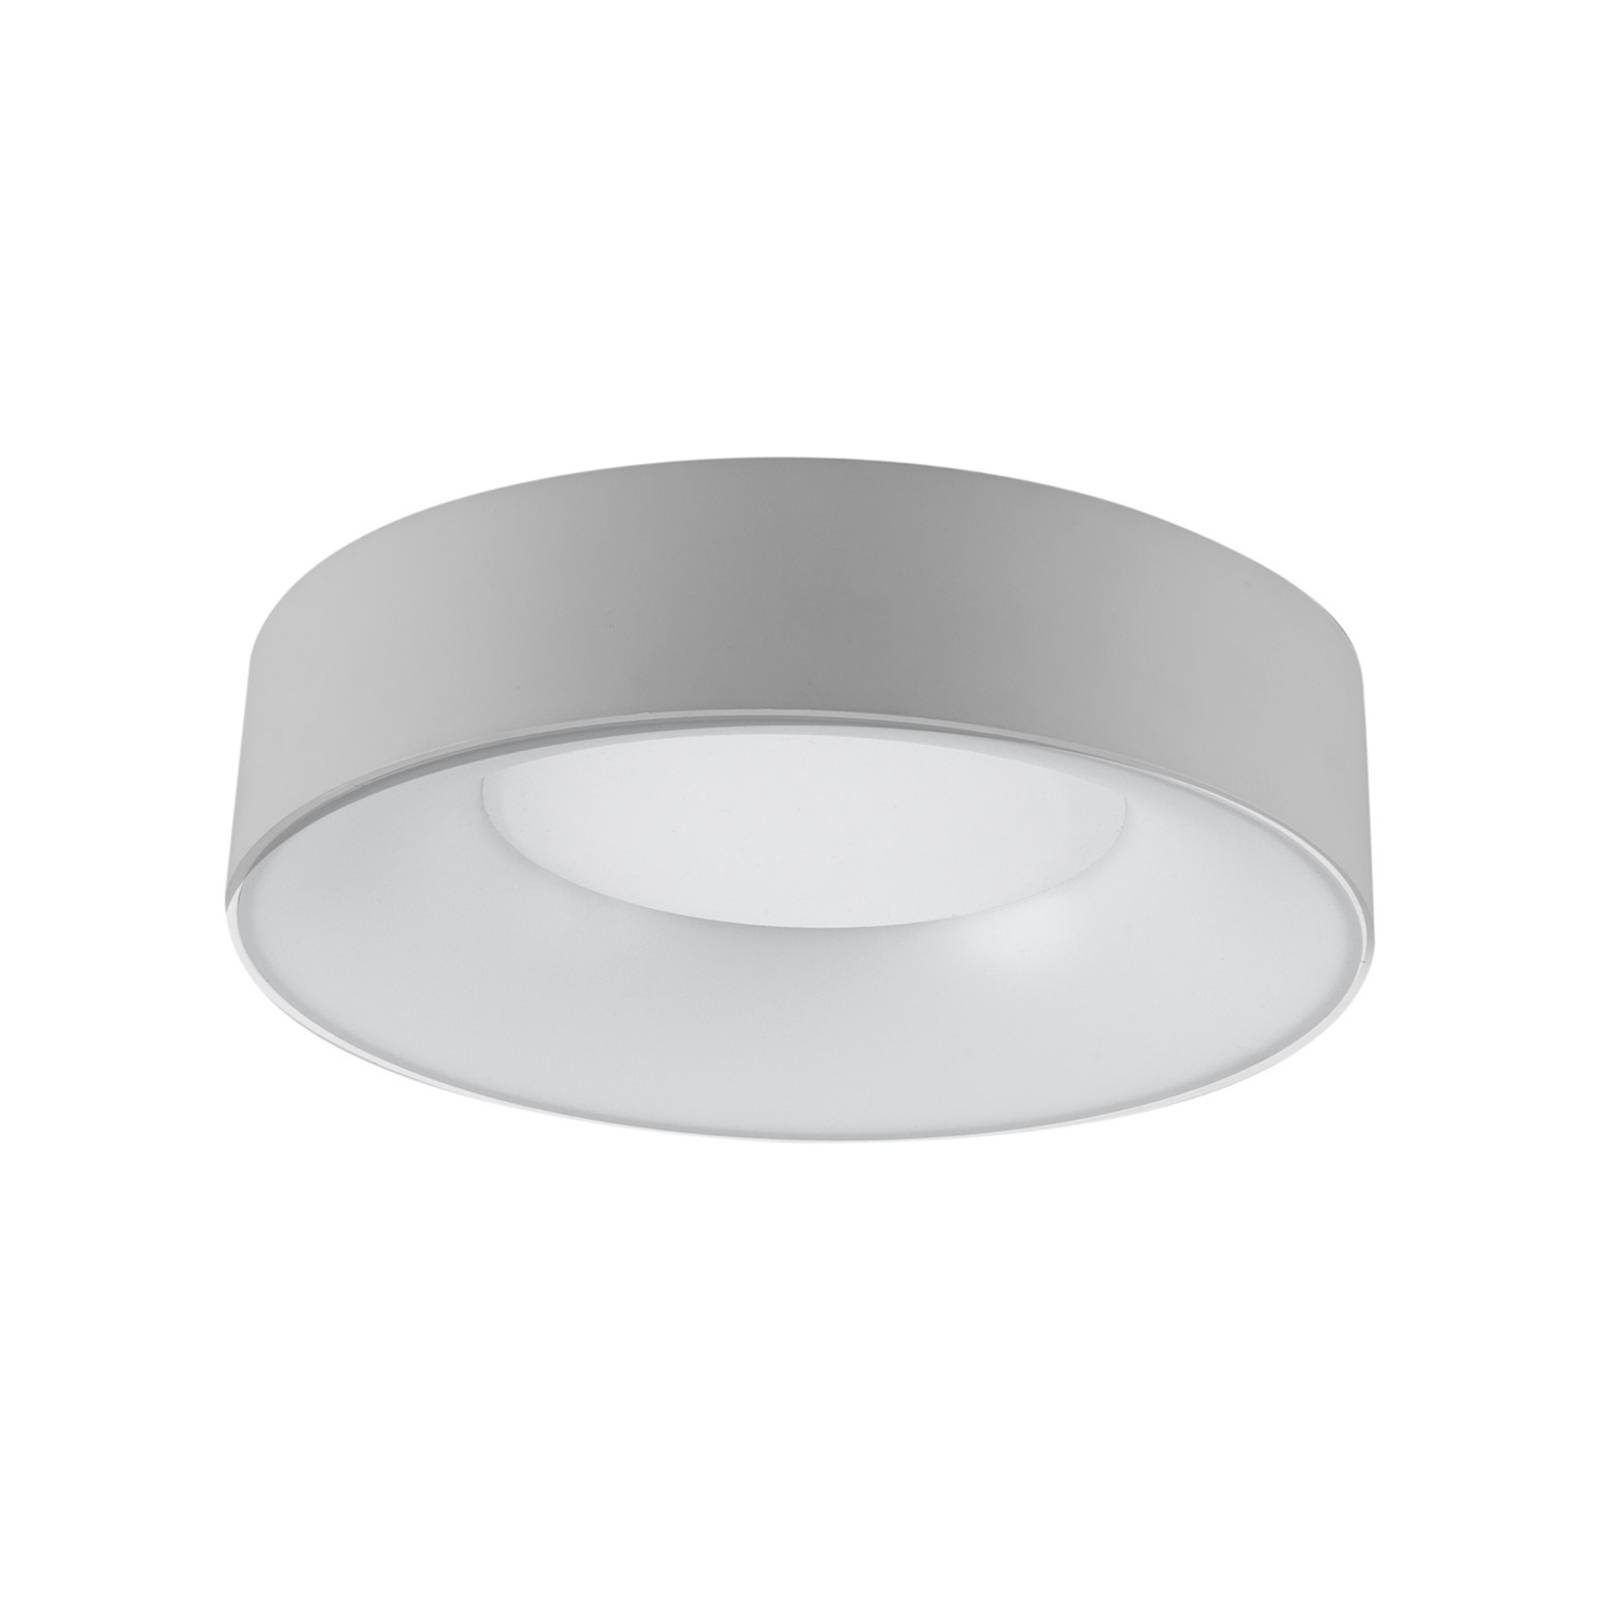 LED ceiling light Sauro, Ø 30 cm, silver